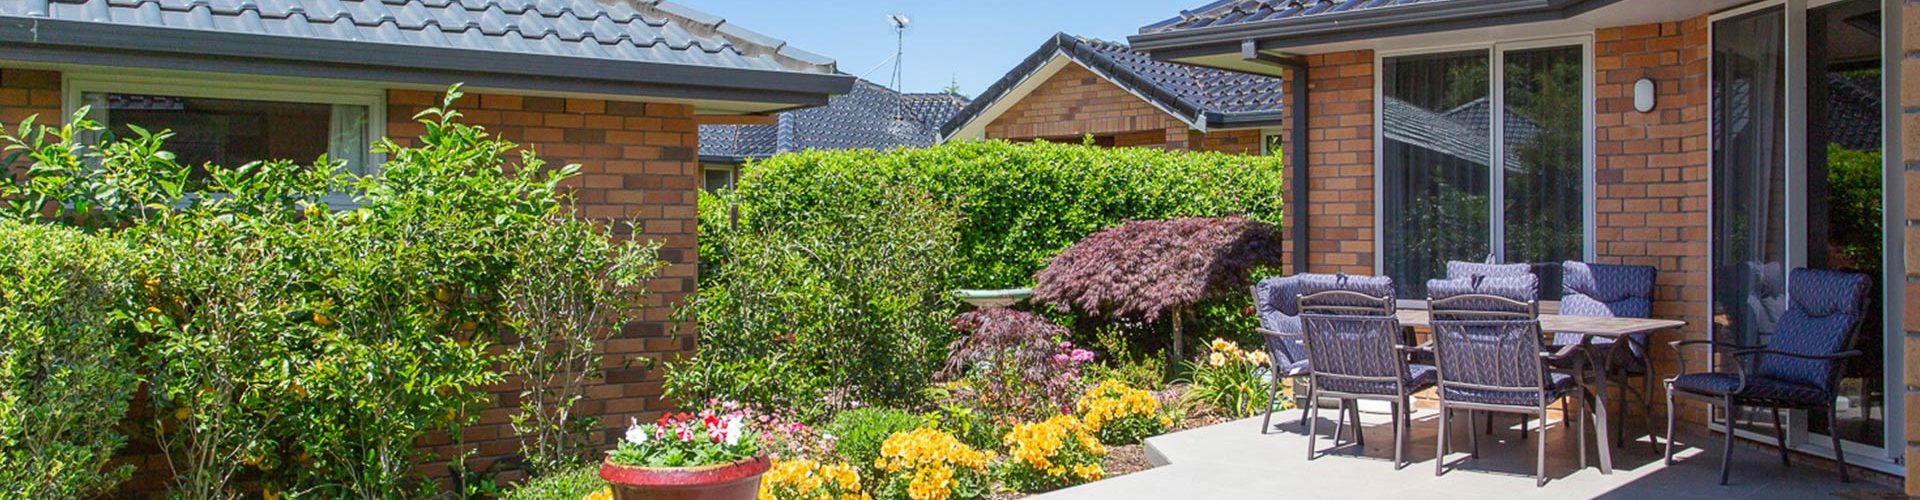 Omokoroa Village backyard garden in bloom